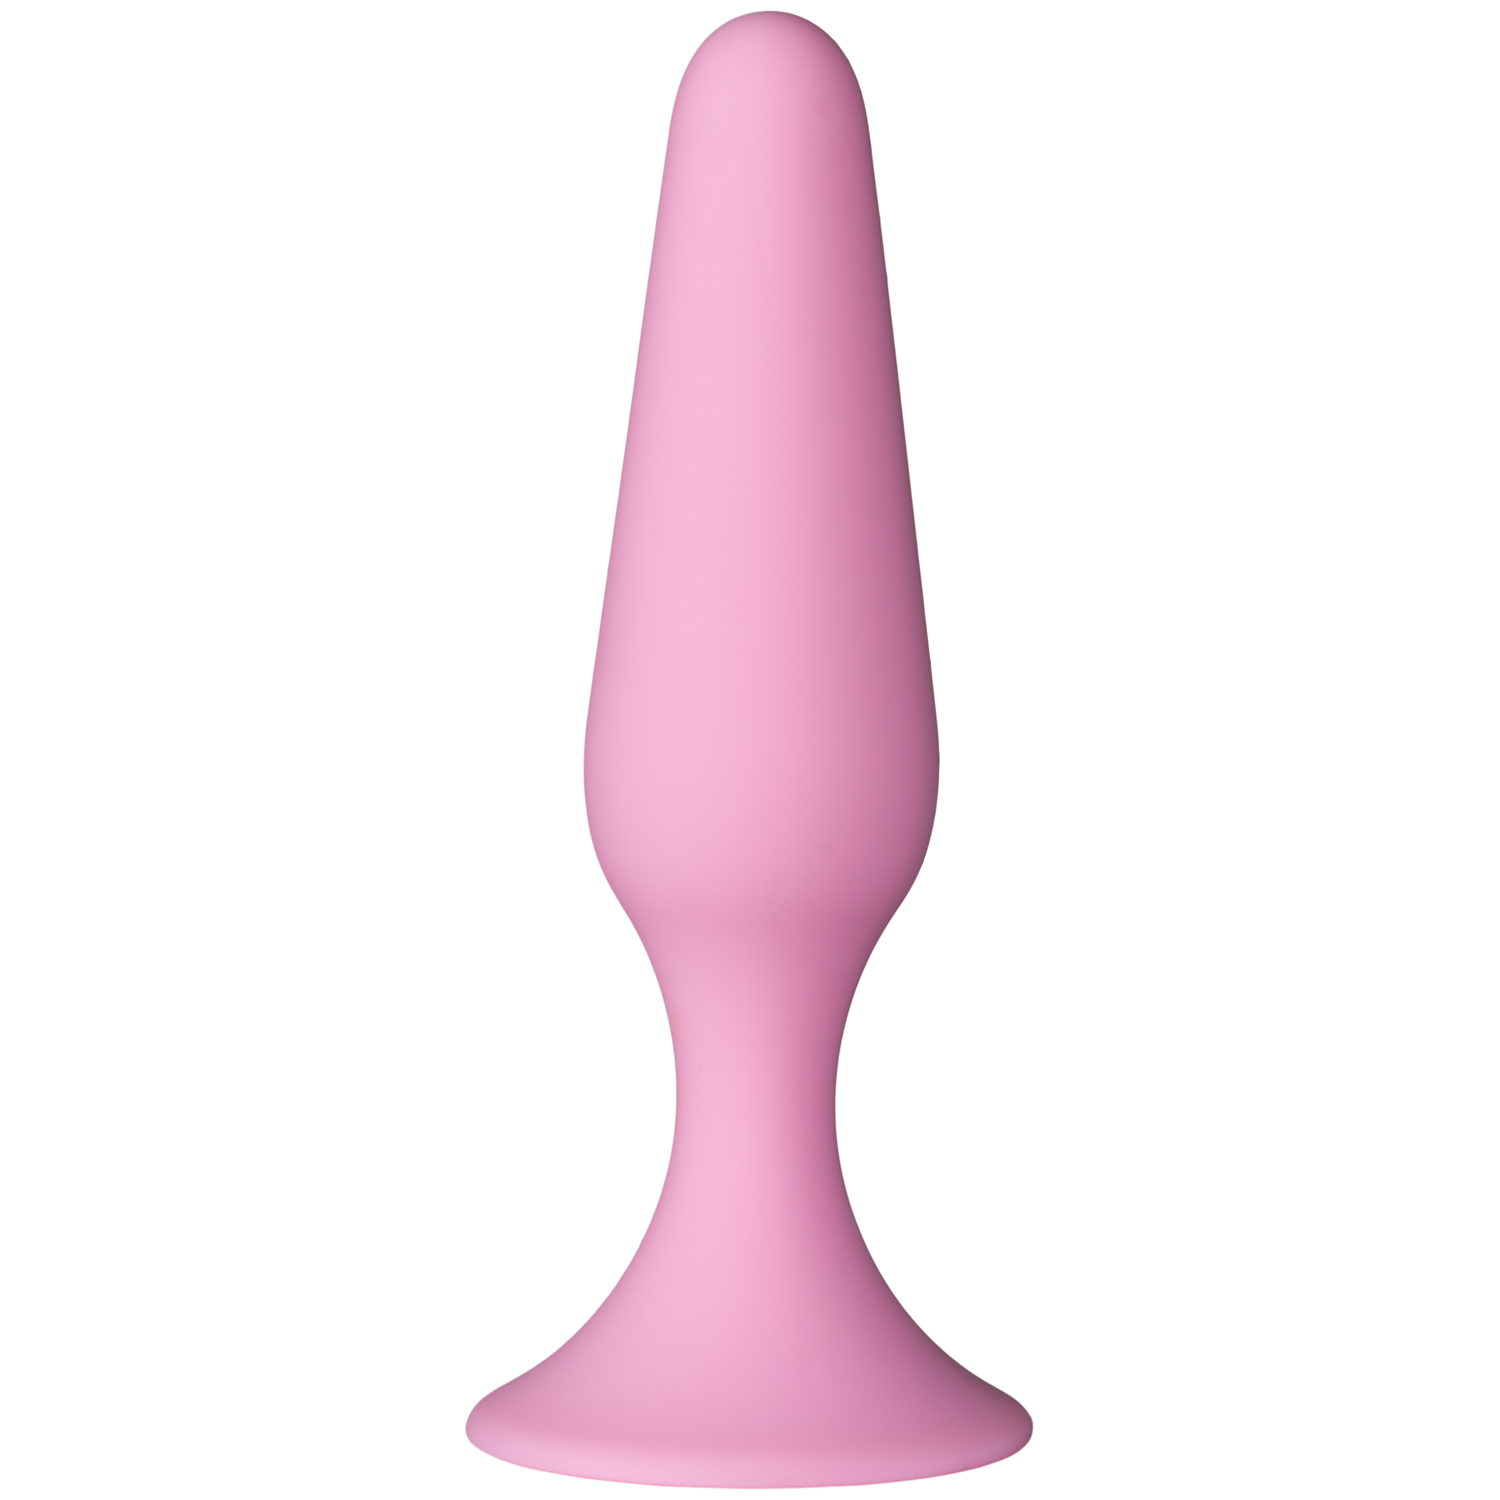 Sinful Playful Pink Slim Butt Plug Small - Pink